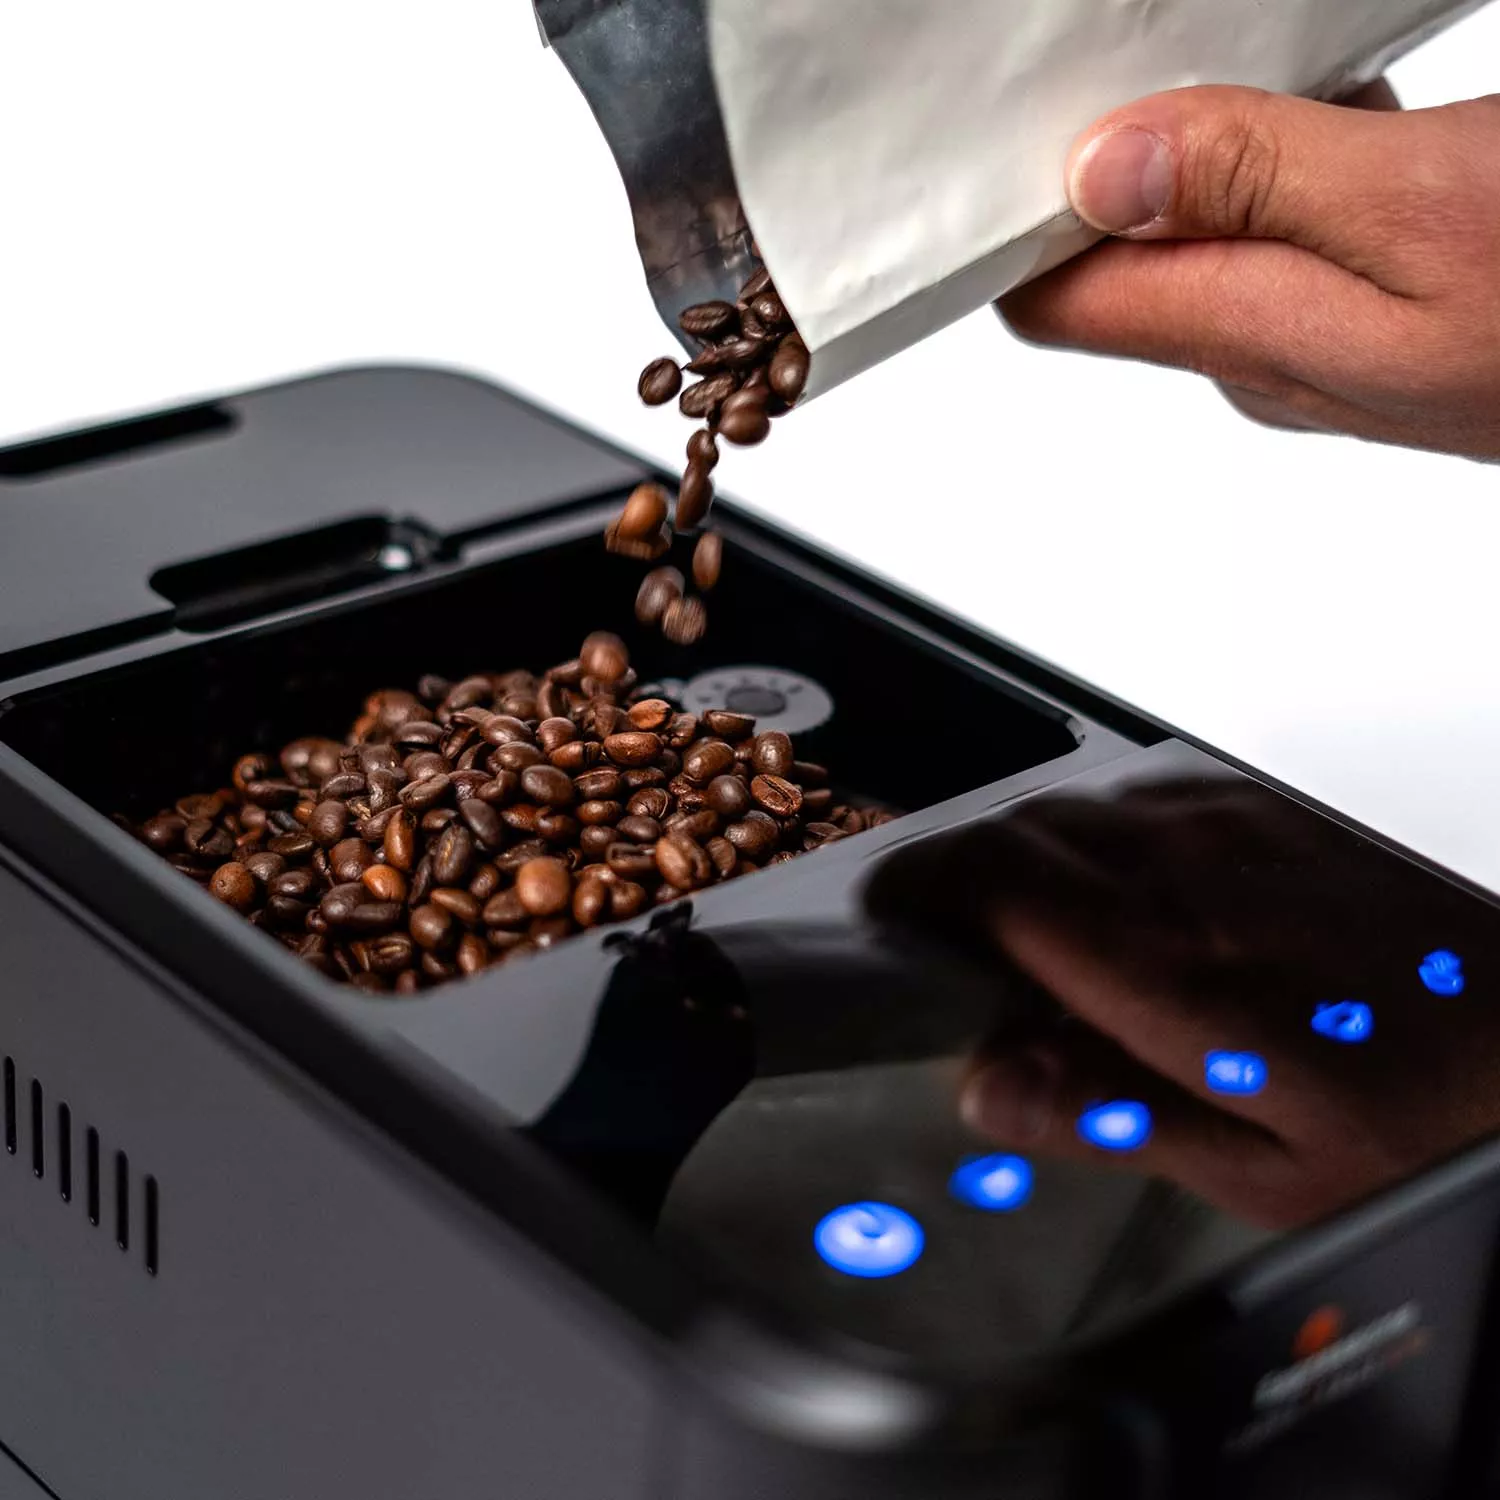 Concierge Elite Fully Automatic Bean to Cup Espresso-Infinite